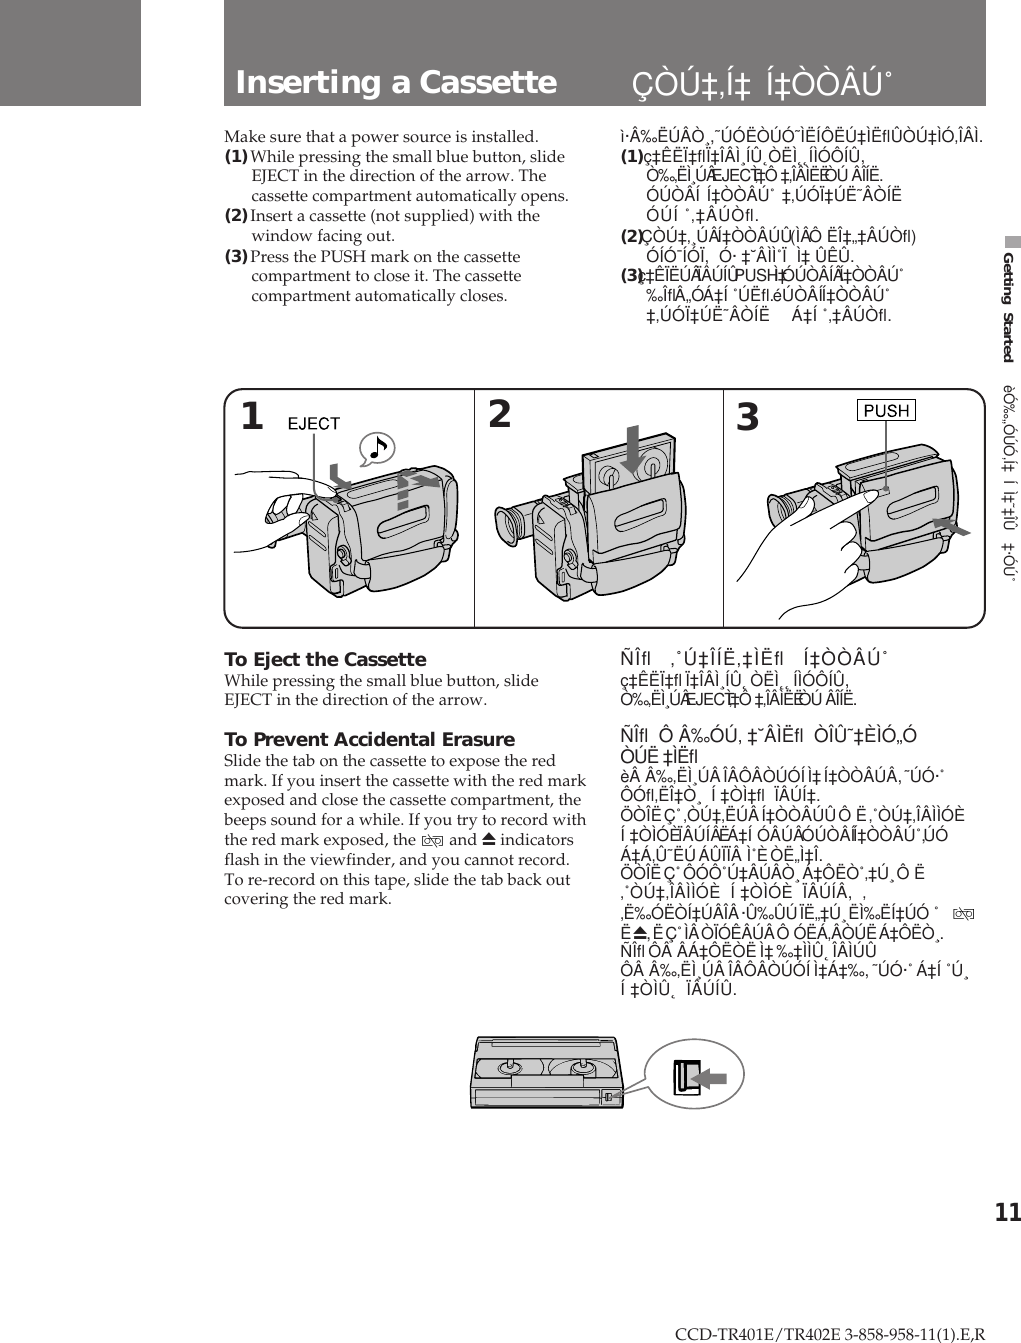 Sony Ccd Tr402e Users Manual 0 0 1 Ccdtr401e 402e 12 E R E5